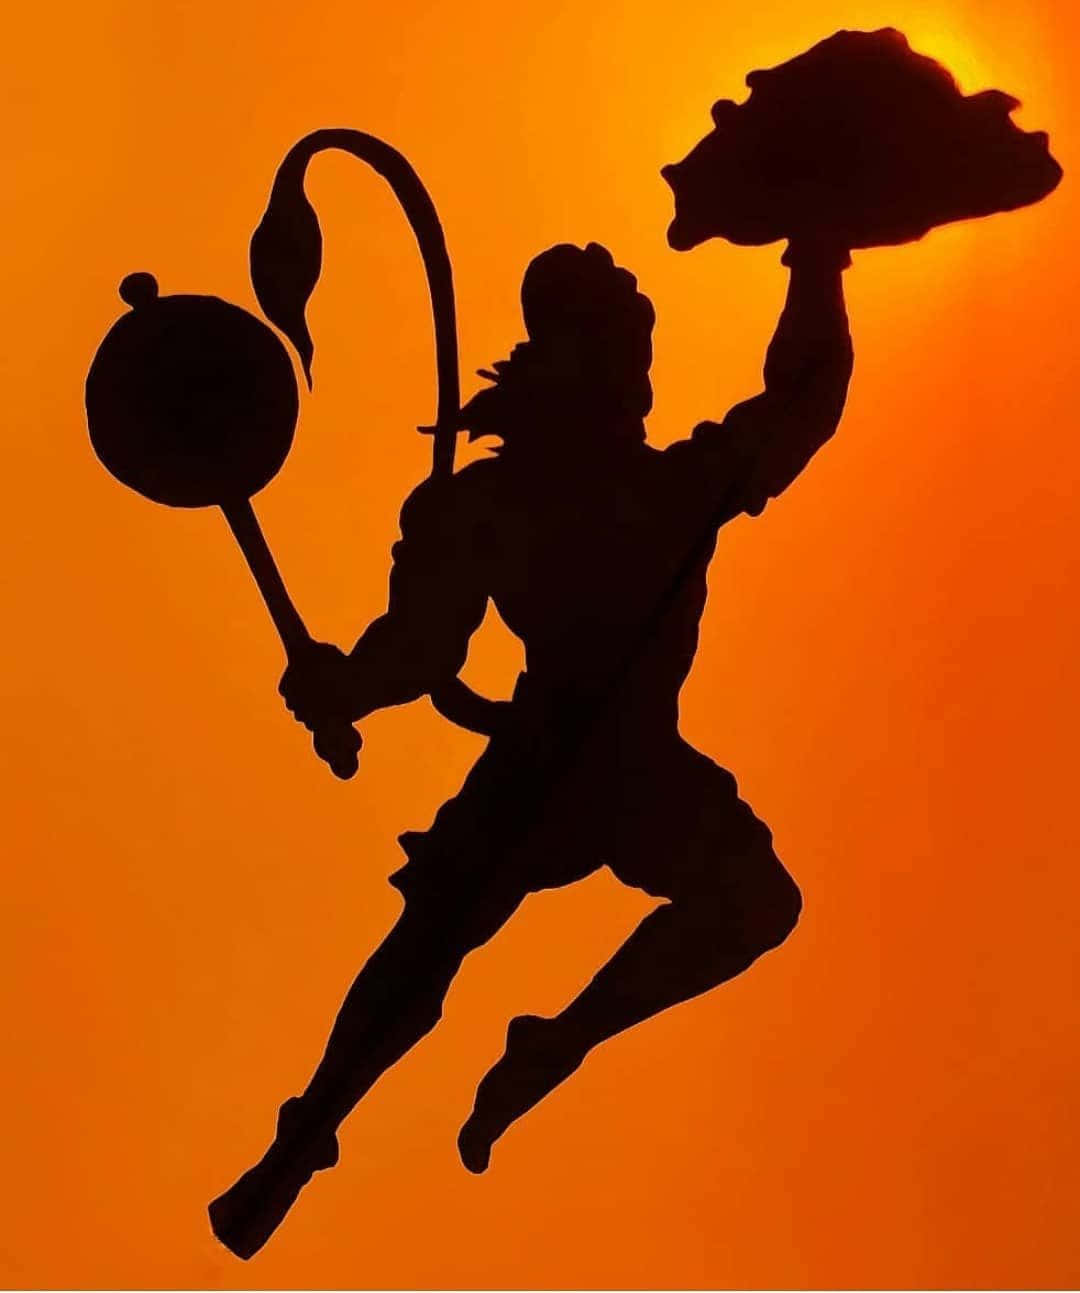 Caption: Majestic Shadow of Lord Hanuman